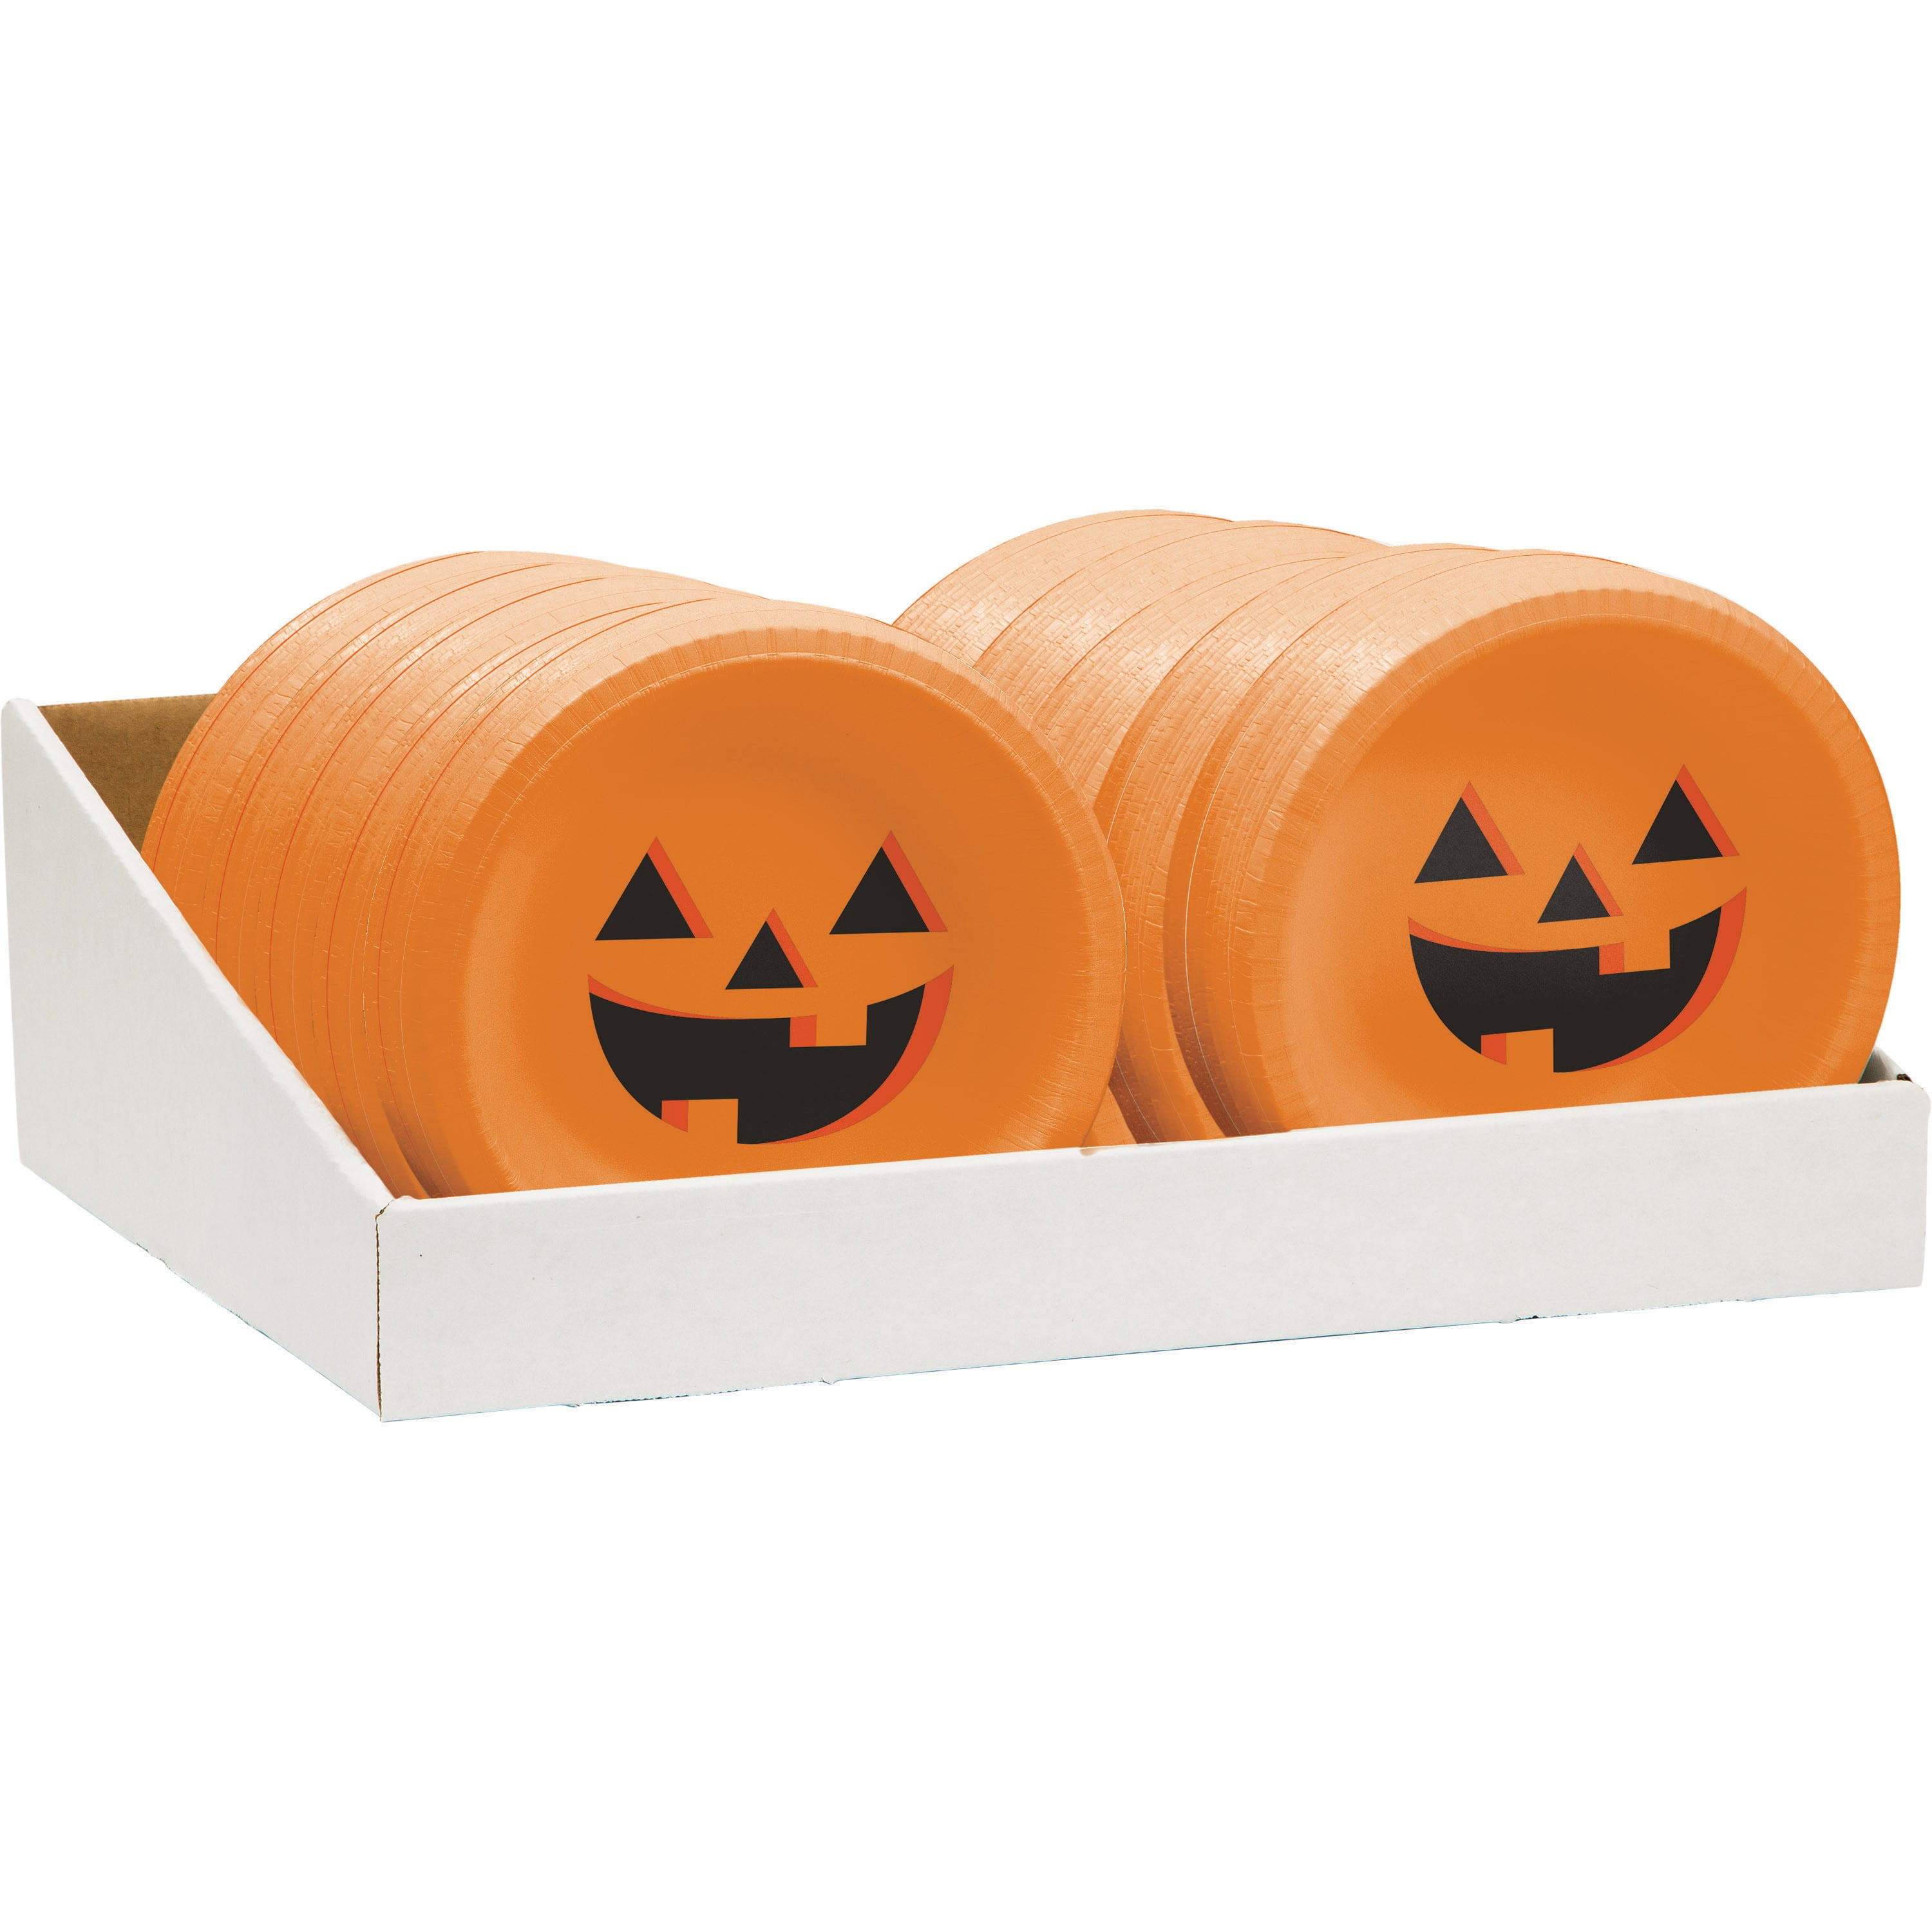 How-To: Papier-Mâché Halloween Candy Bowls - Make